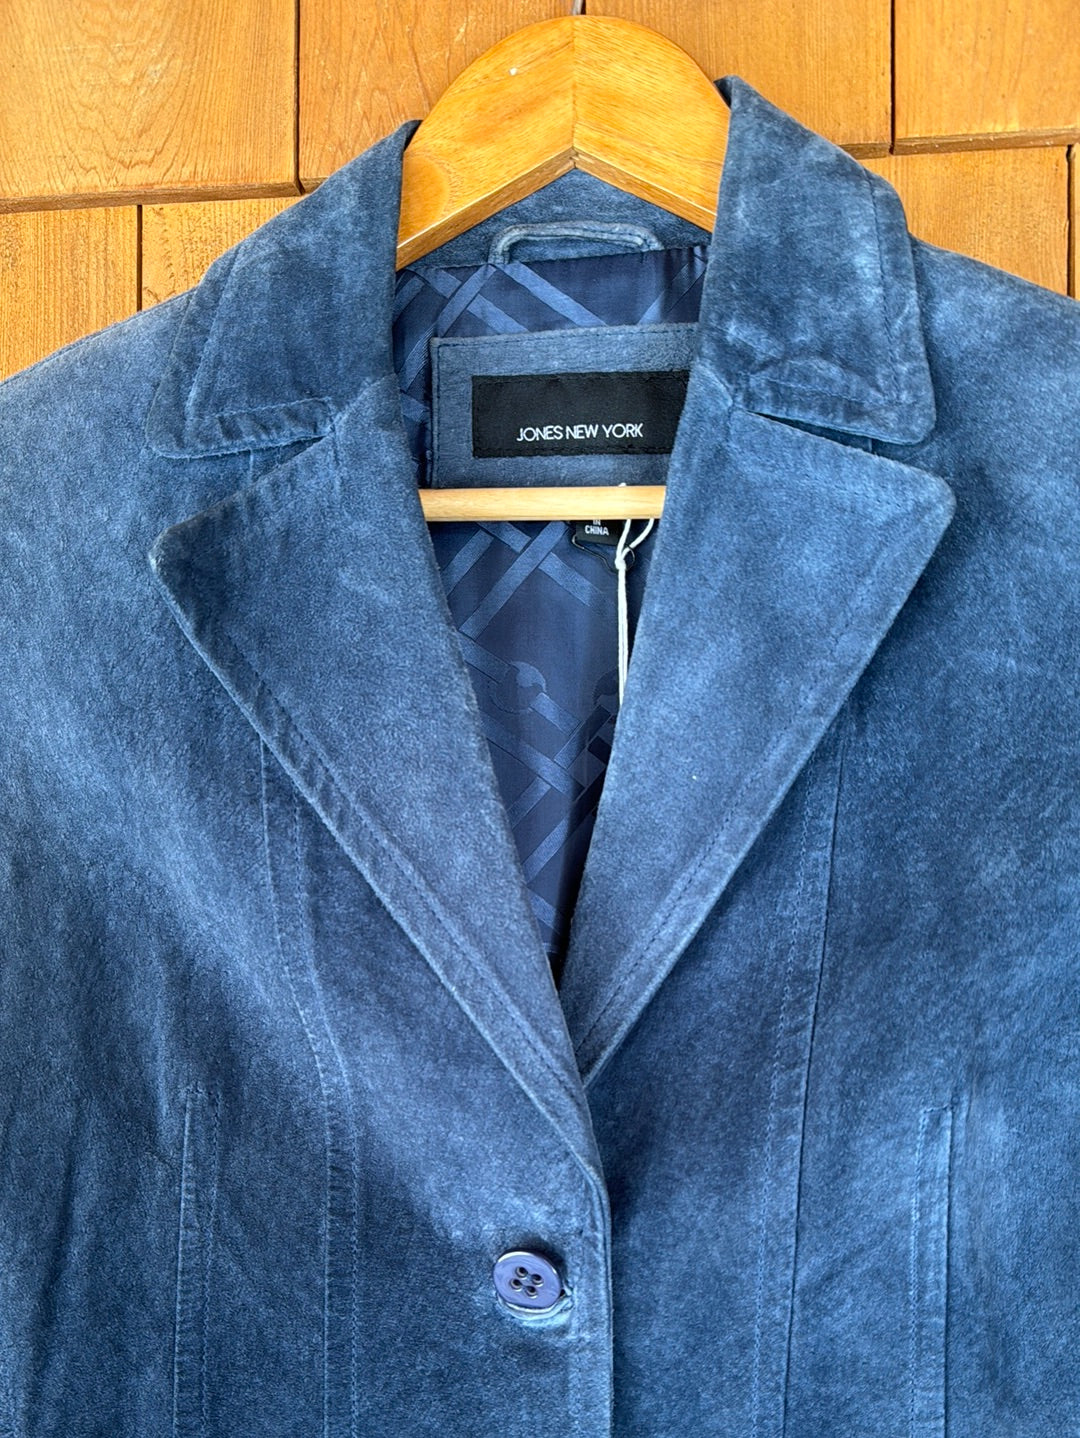 Jones New York Womens Small Denim Shirt Jacket Medium Blue Vintage Hong  Kong | eBay